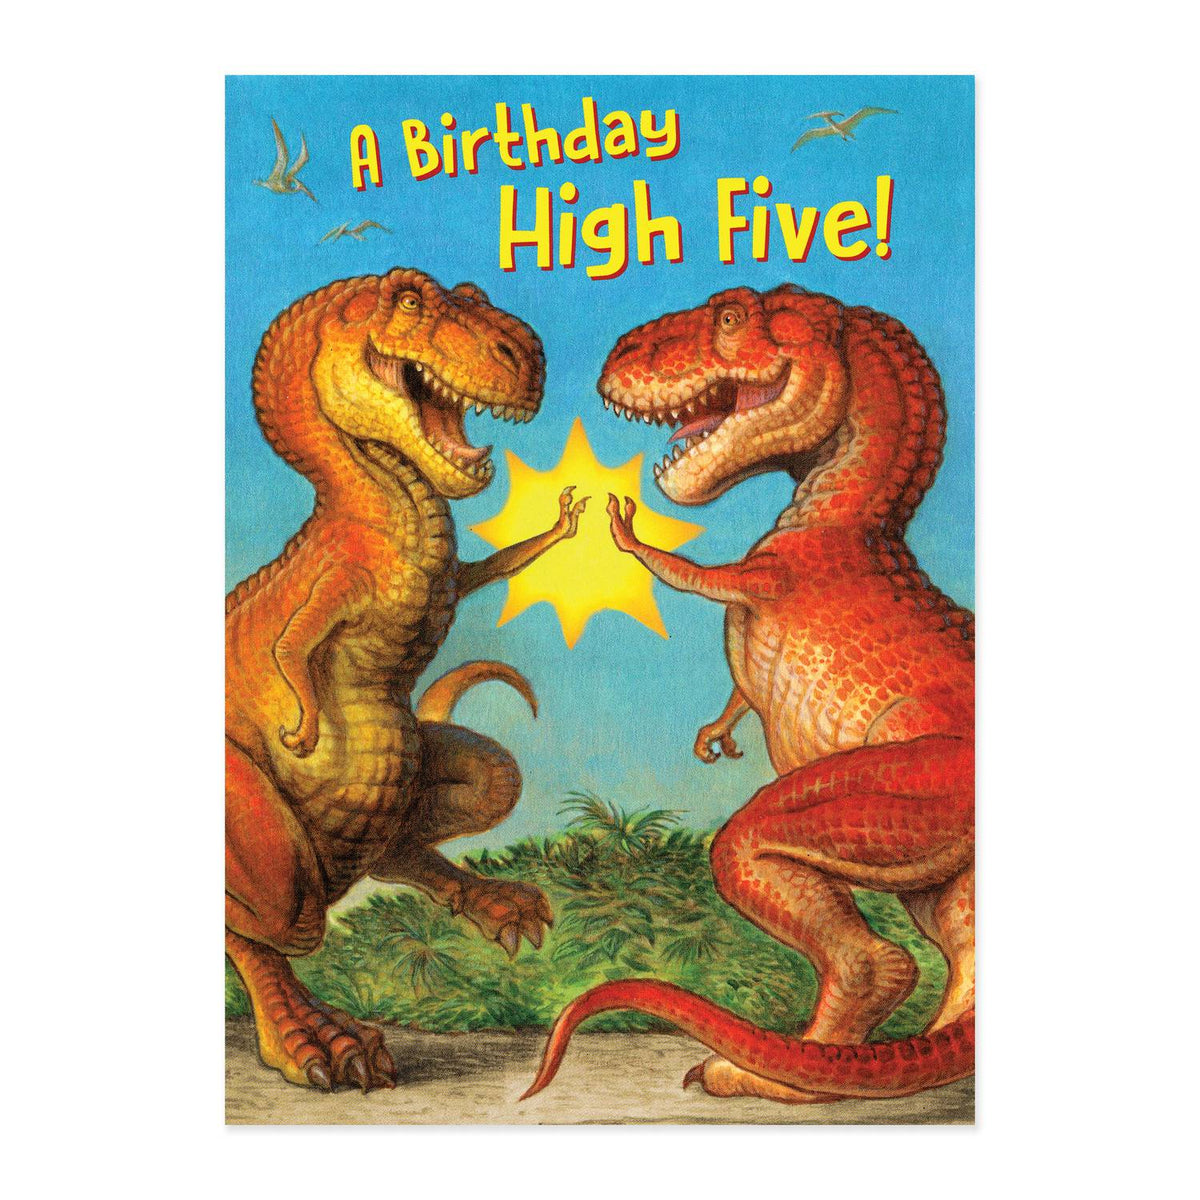 Dinosaur High-Five Birthday Cover